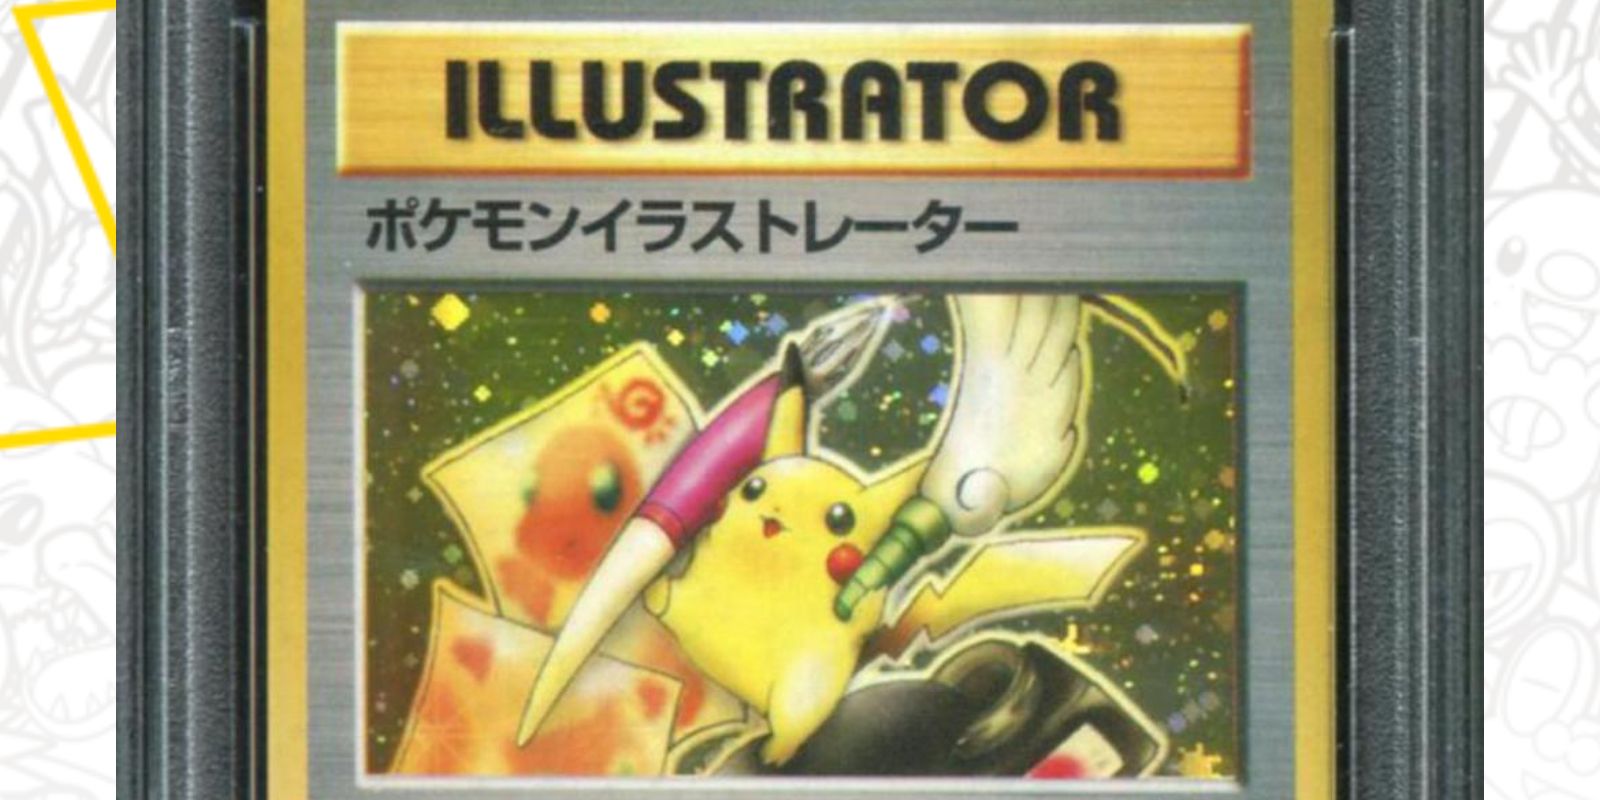 Pikachu Illustrator card